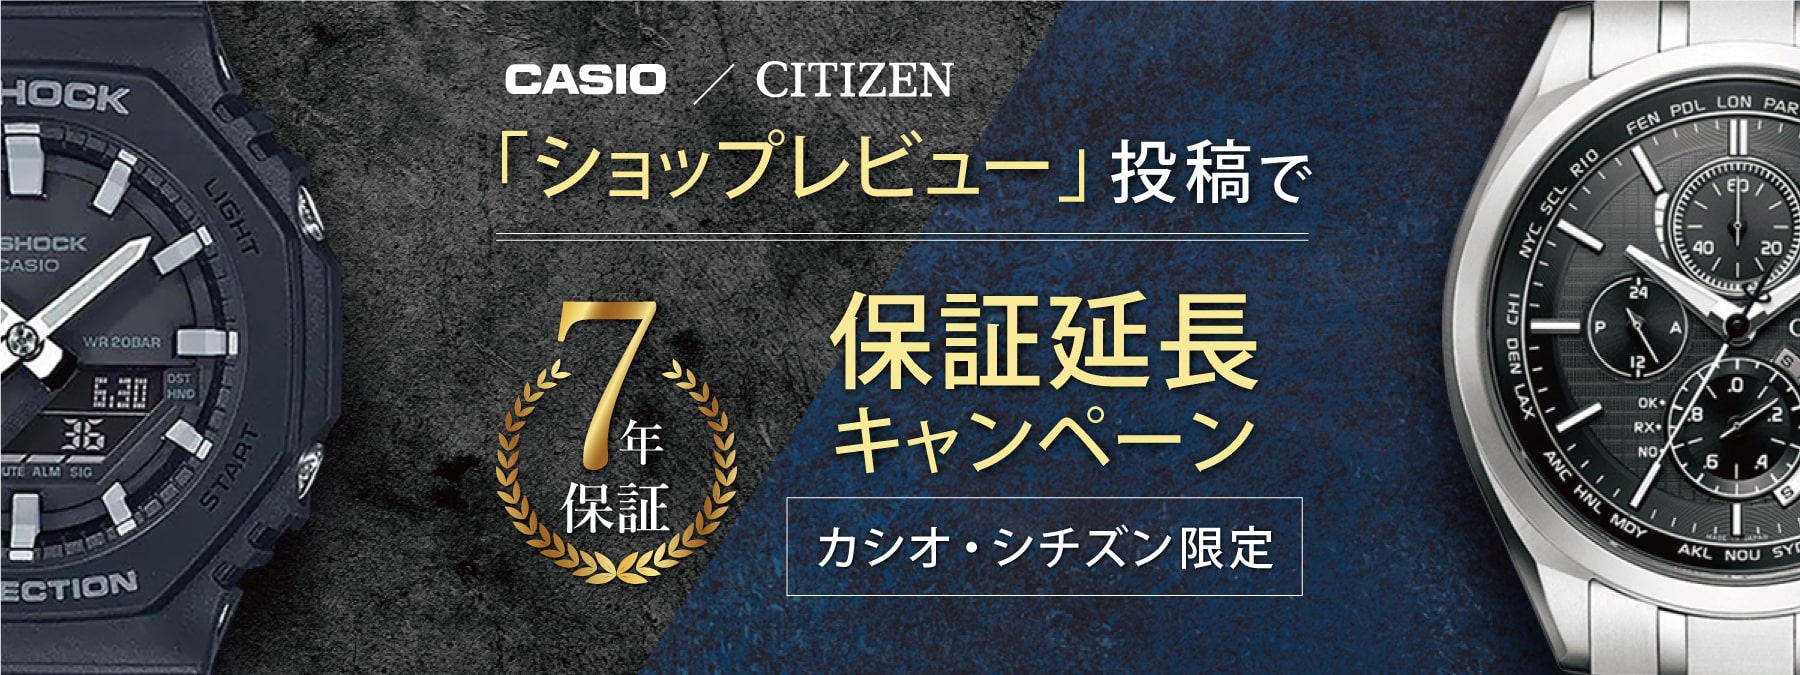 Casio Citizen 7 year warranty campaign